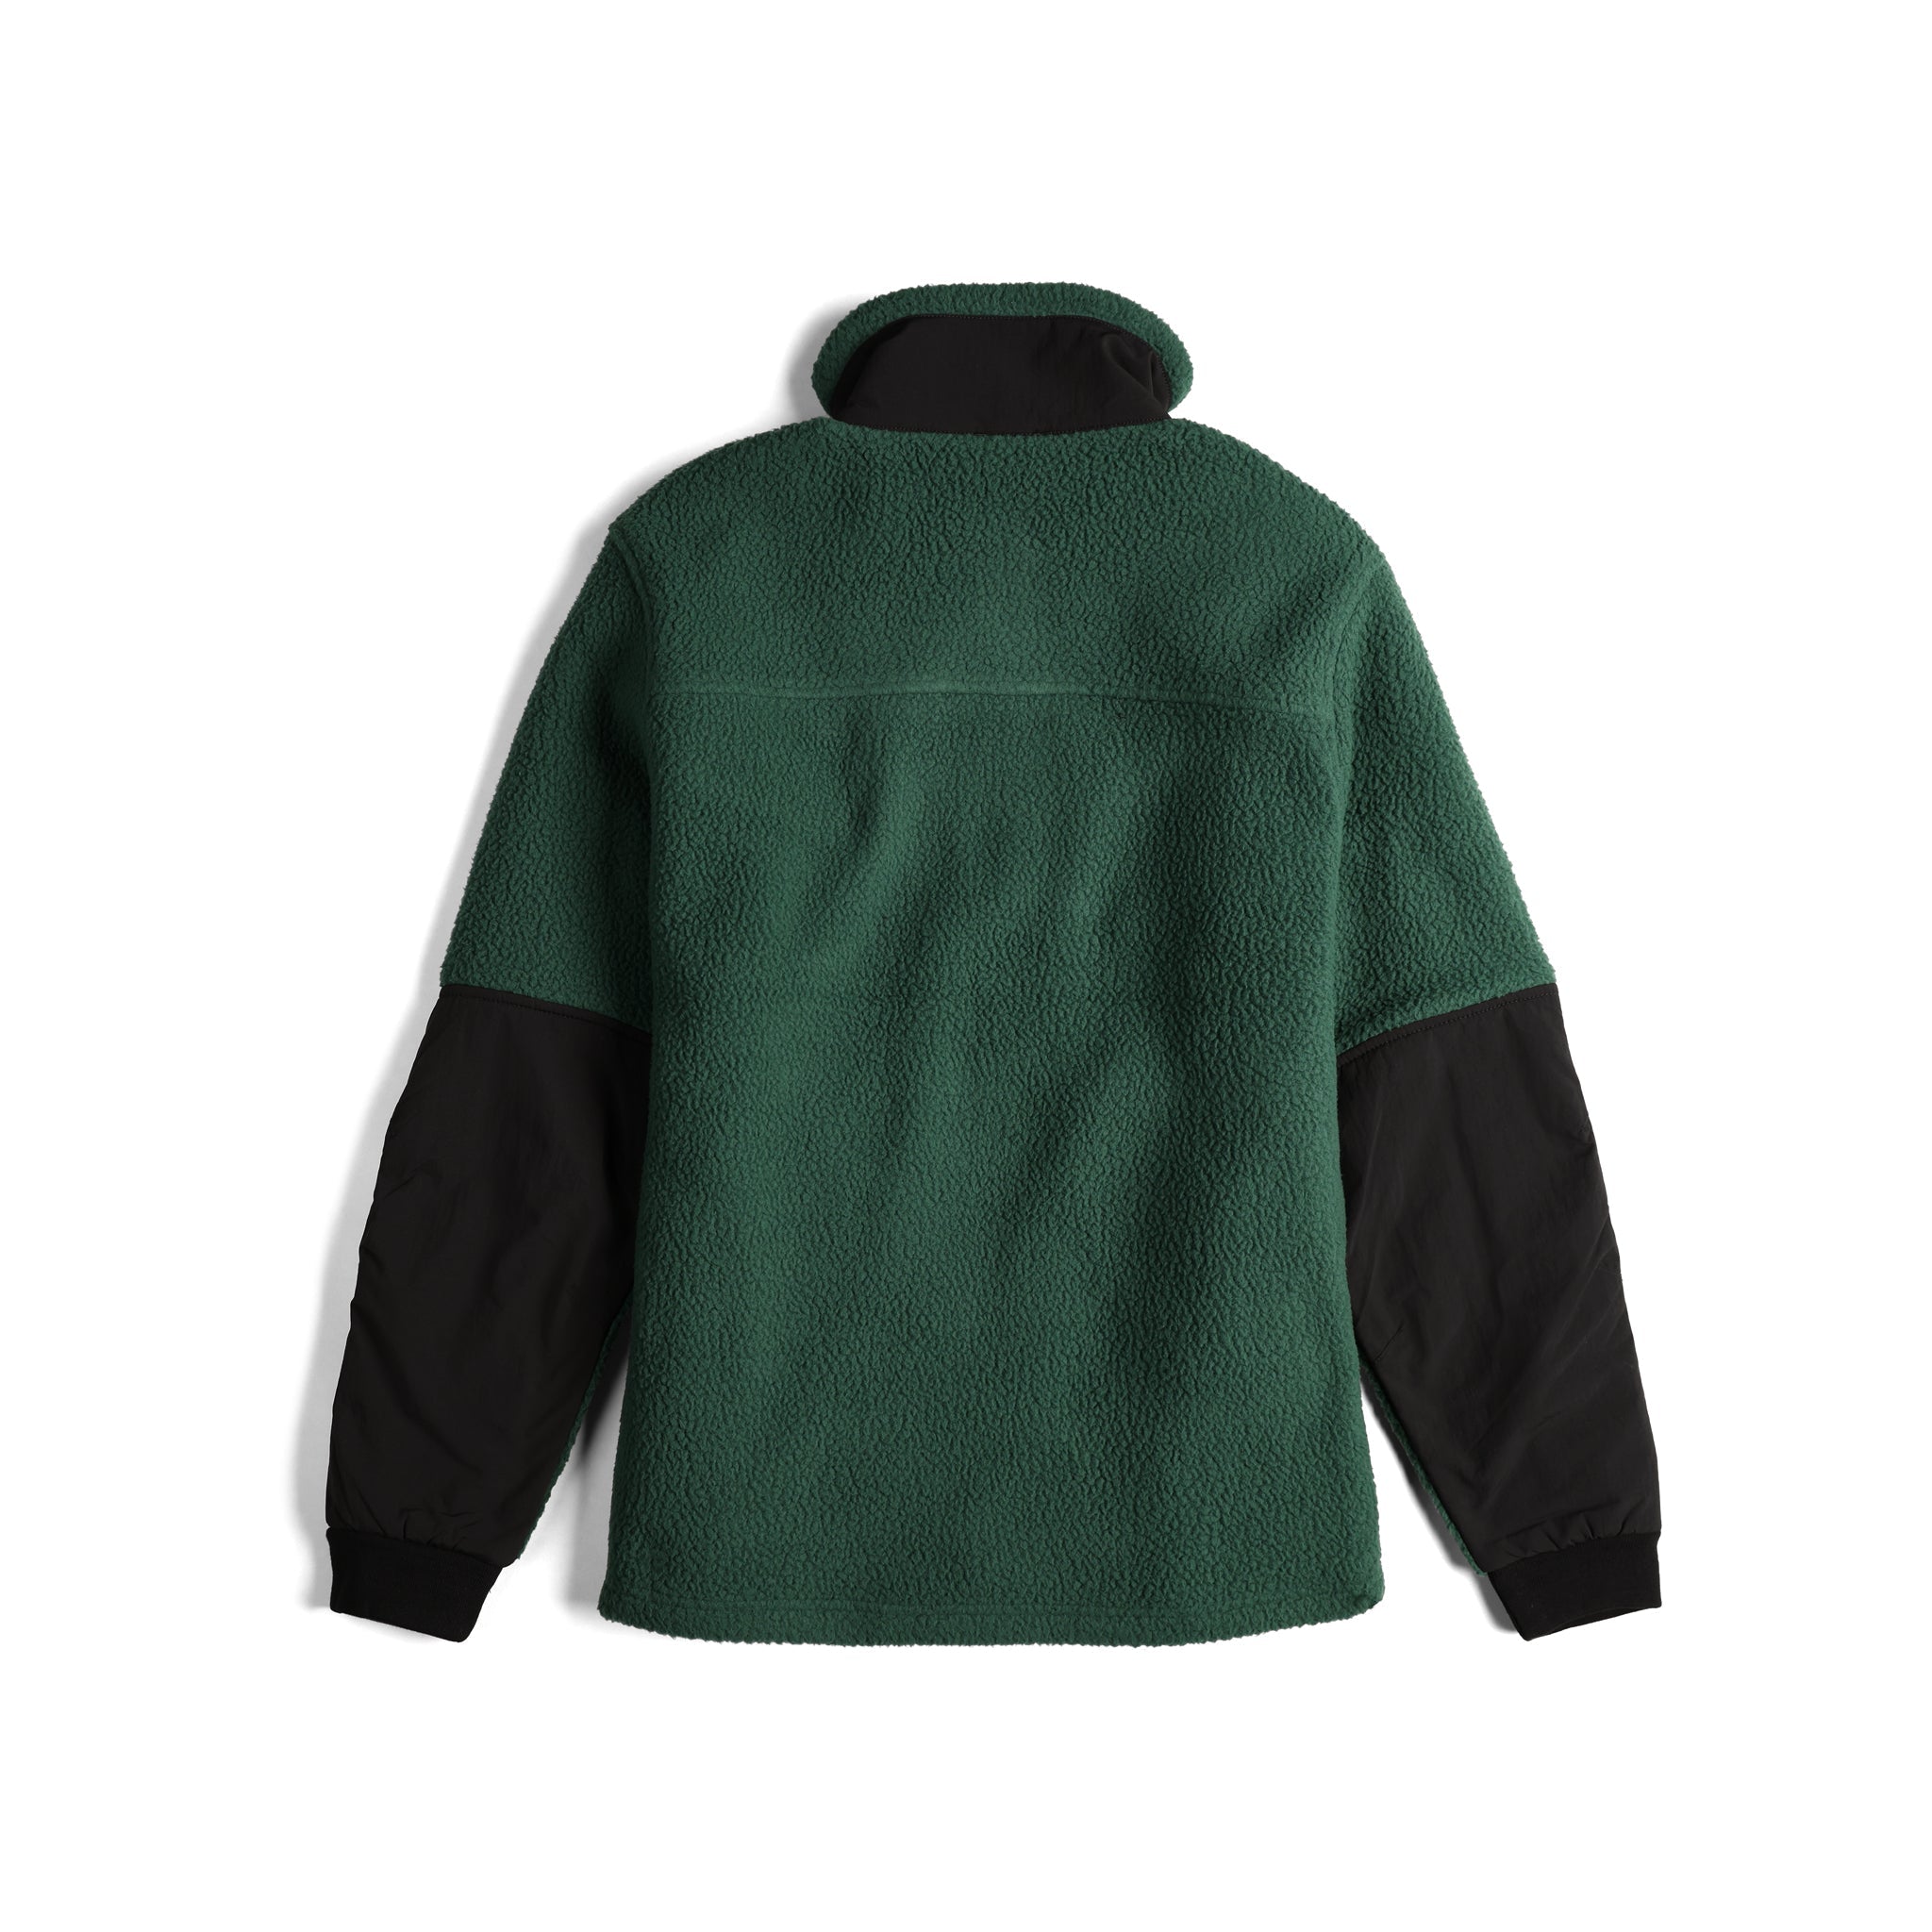 Topo Designs x Danner Mountain Fleece Pullover M in "Forest / Black"